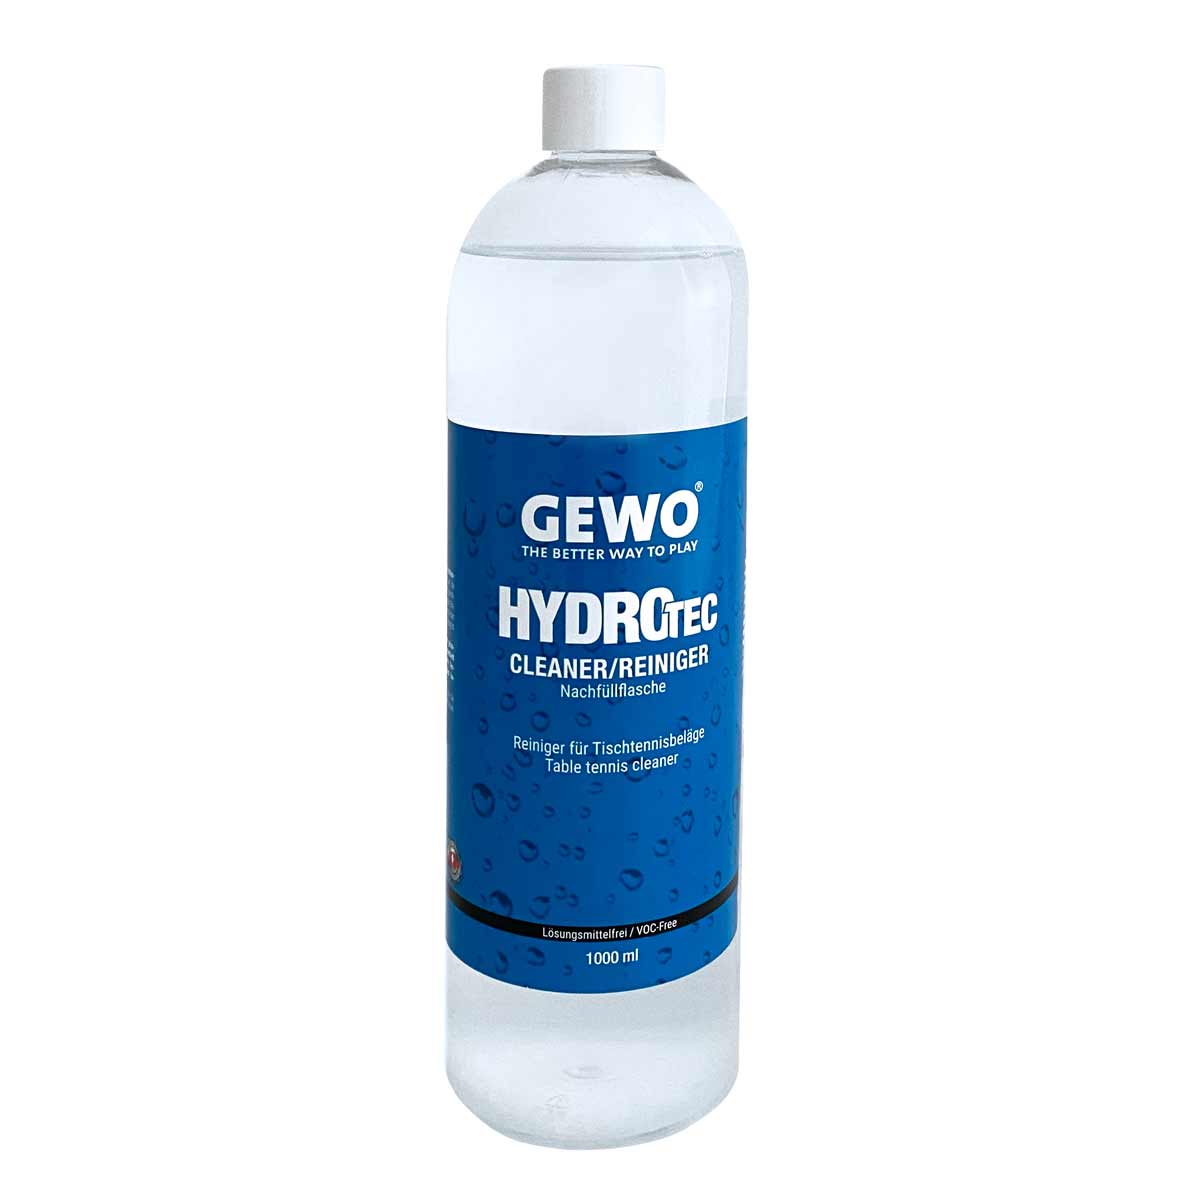 GEWO HydroTec cleaner 1000ml